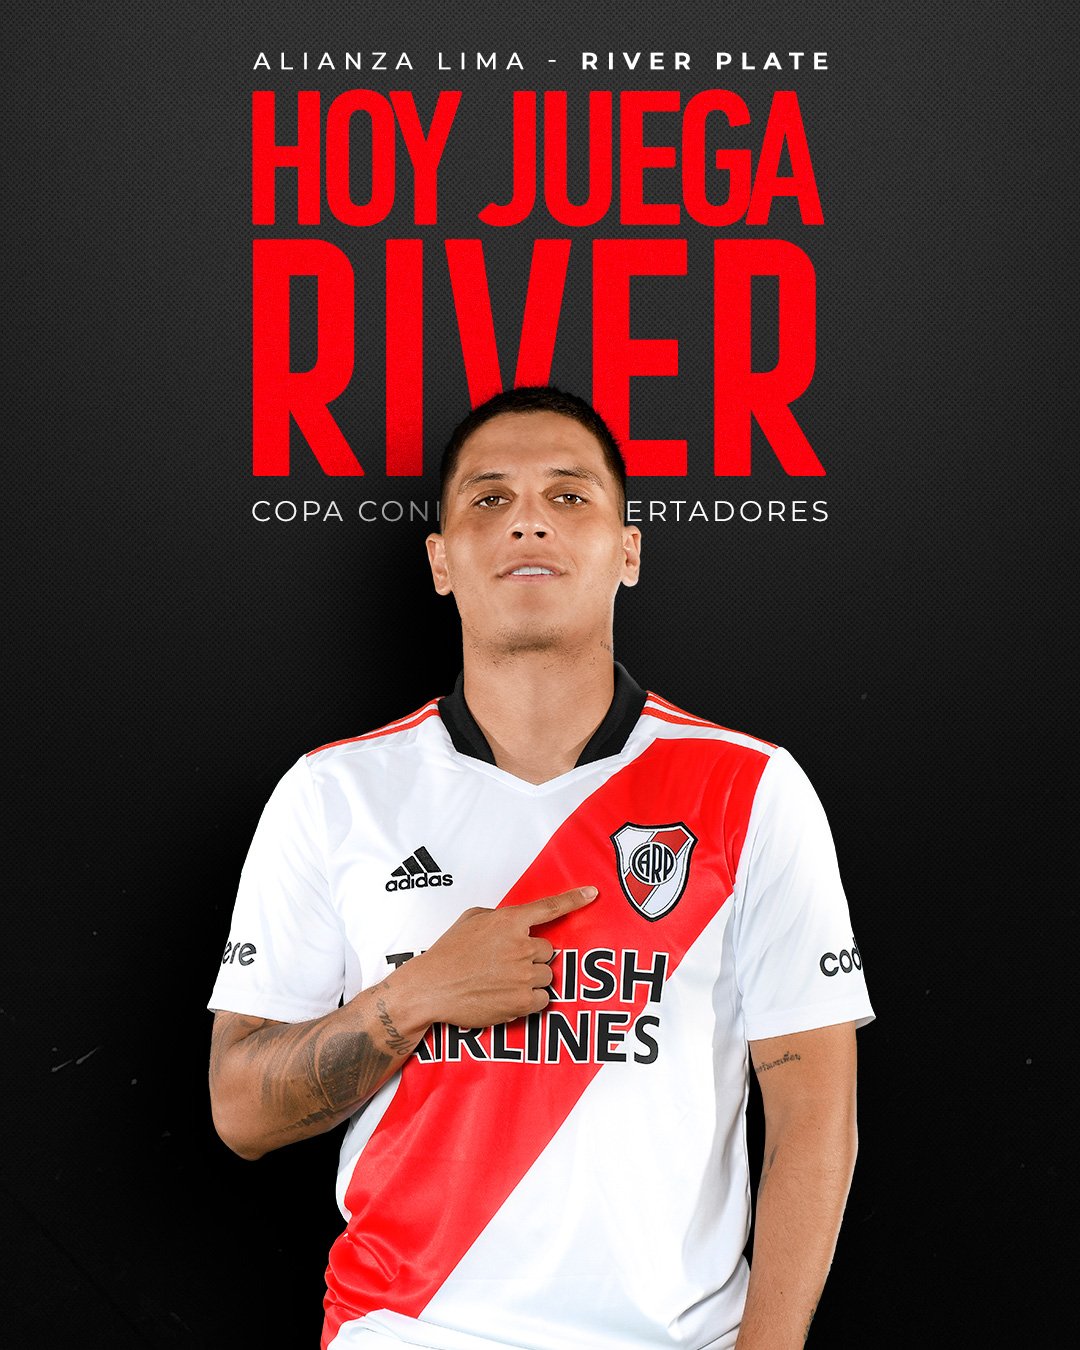 Hermano Cada semana Alargar River Plate on Twitter: "¡HOY JUEGA RIVER! ⚪❤⚪ https://t.co/Gu41TlGJKe" /  Twitter